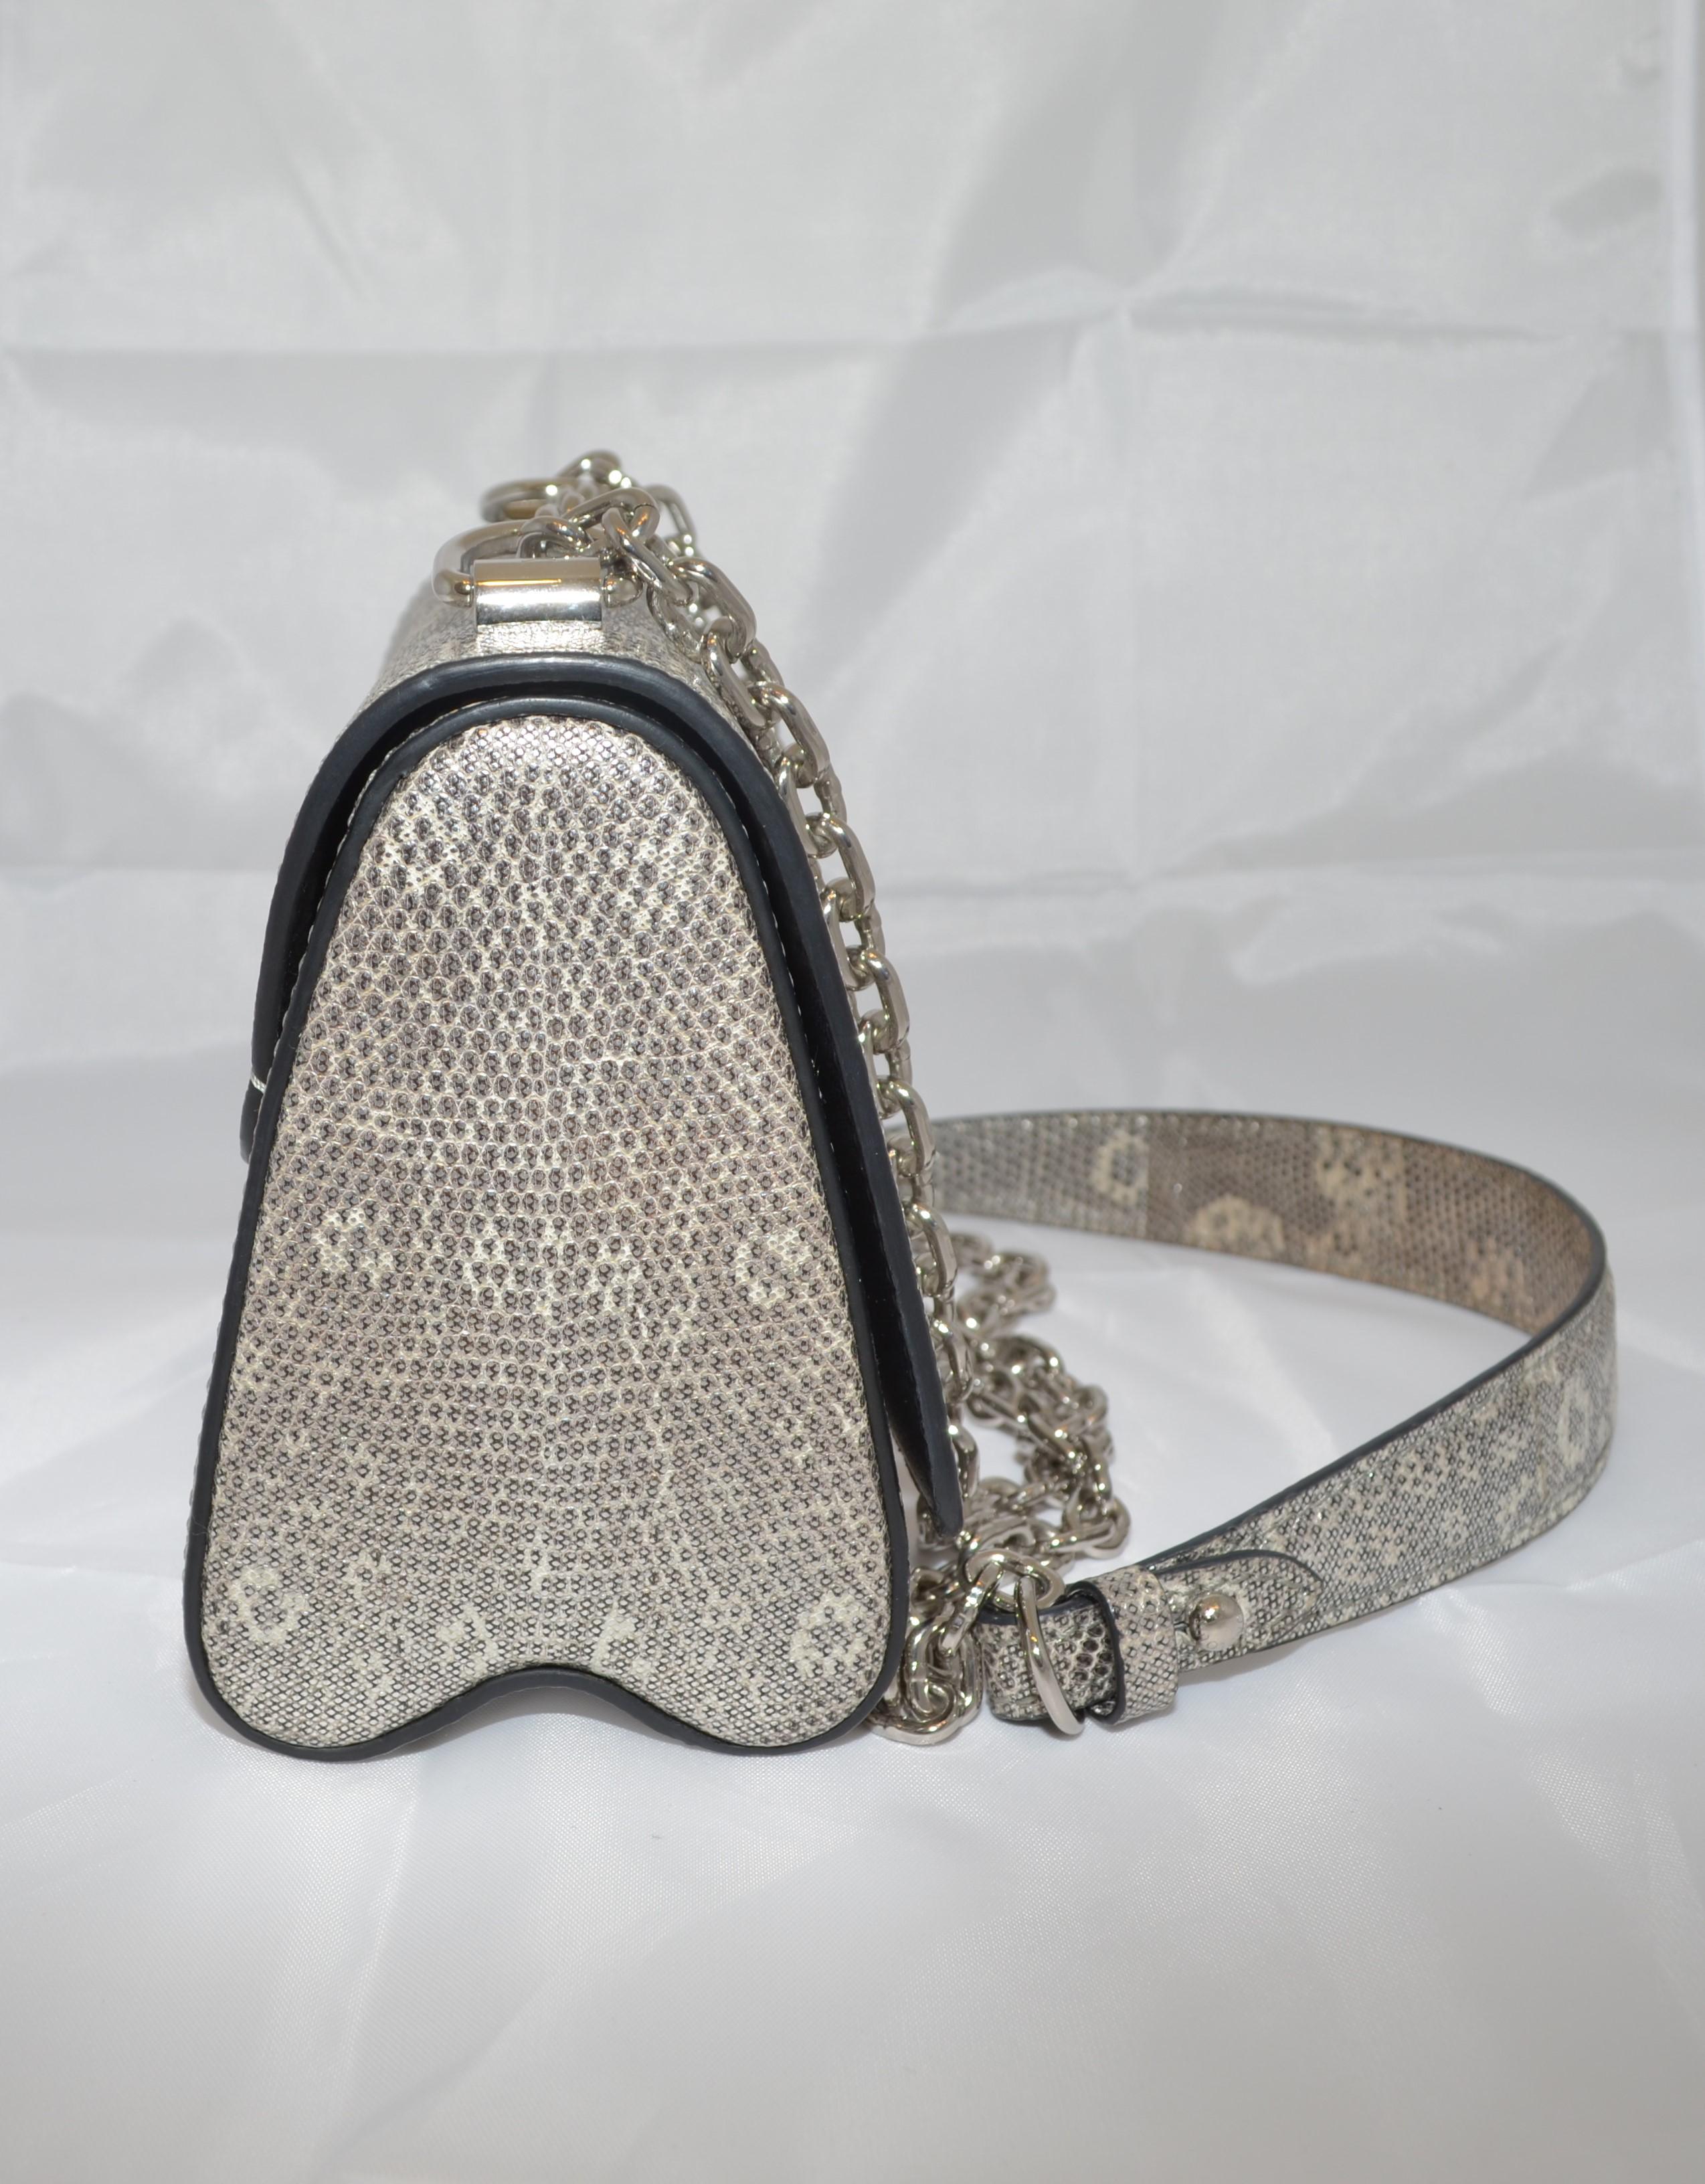 Louis Vuitton Silver Lizard Twist PM Handbag Limited Edition with Cites 1